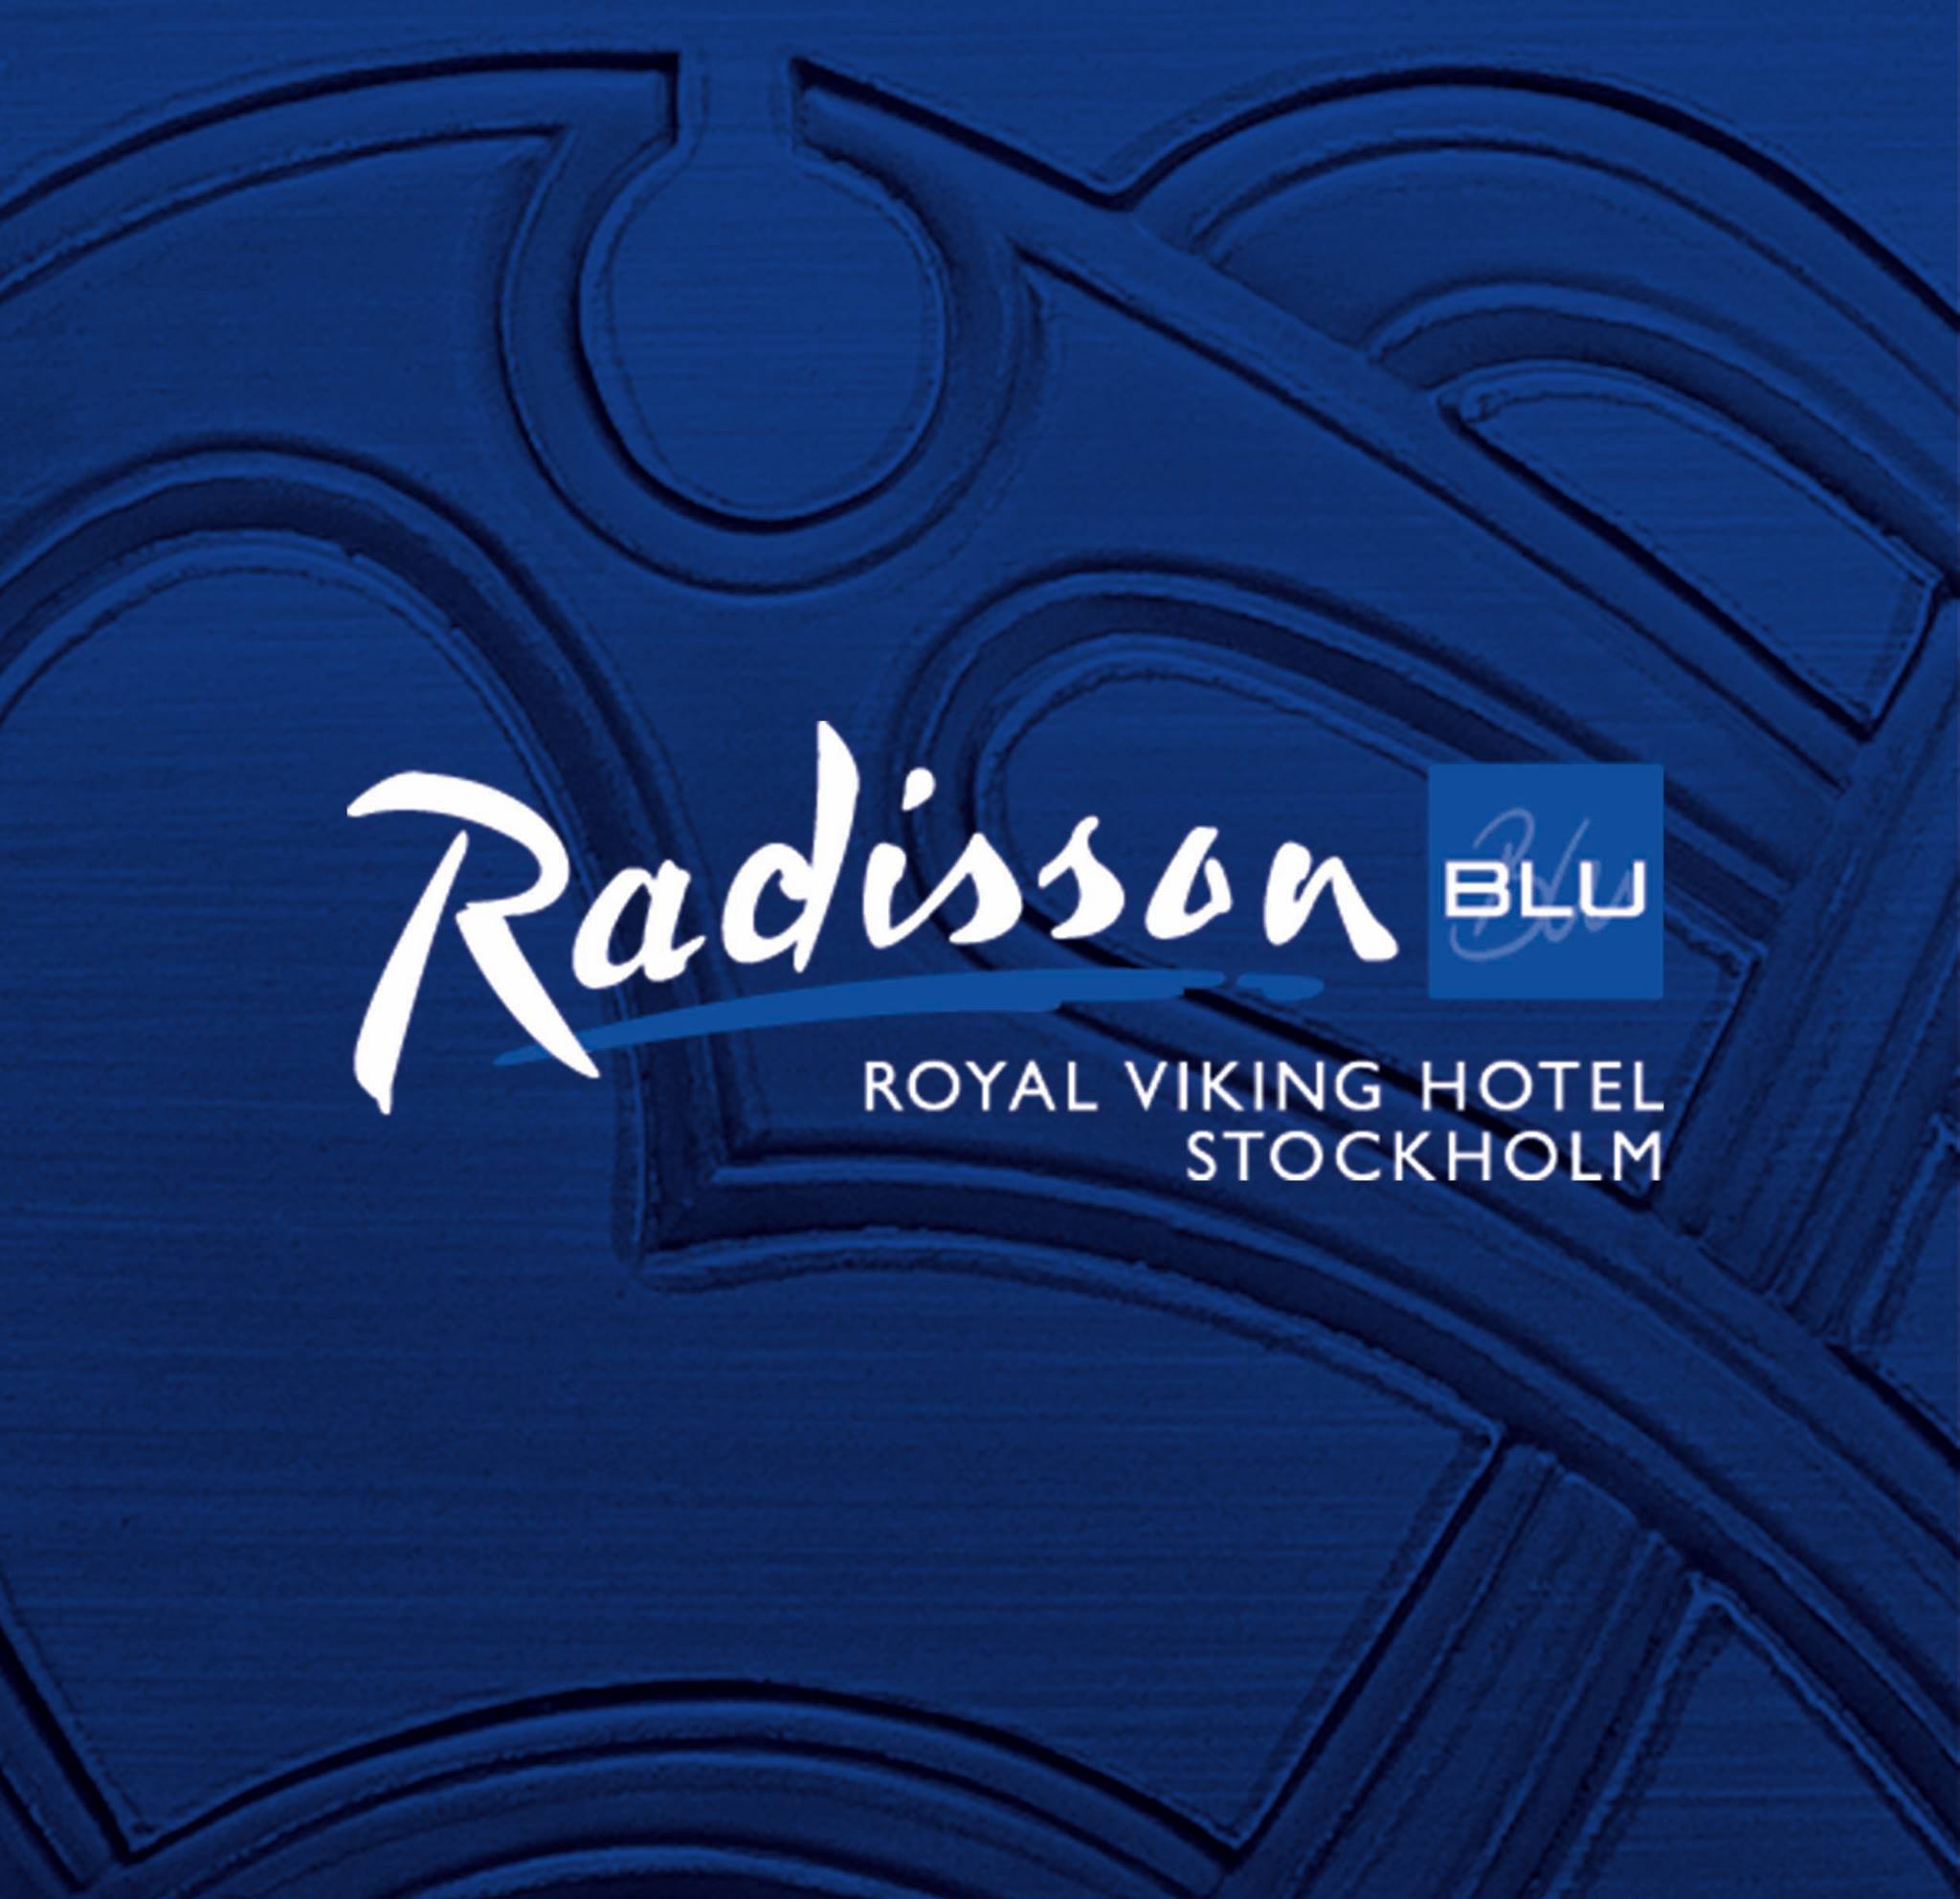 Image result for Radisson Blu Royal Viking Hotel, Stockholm